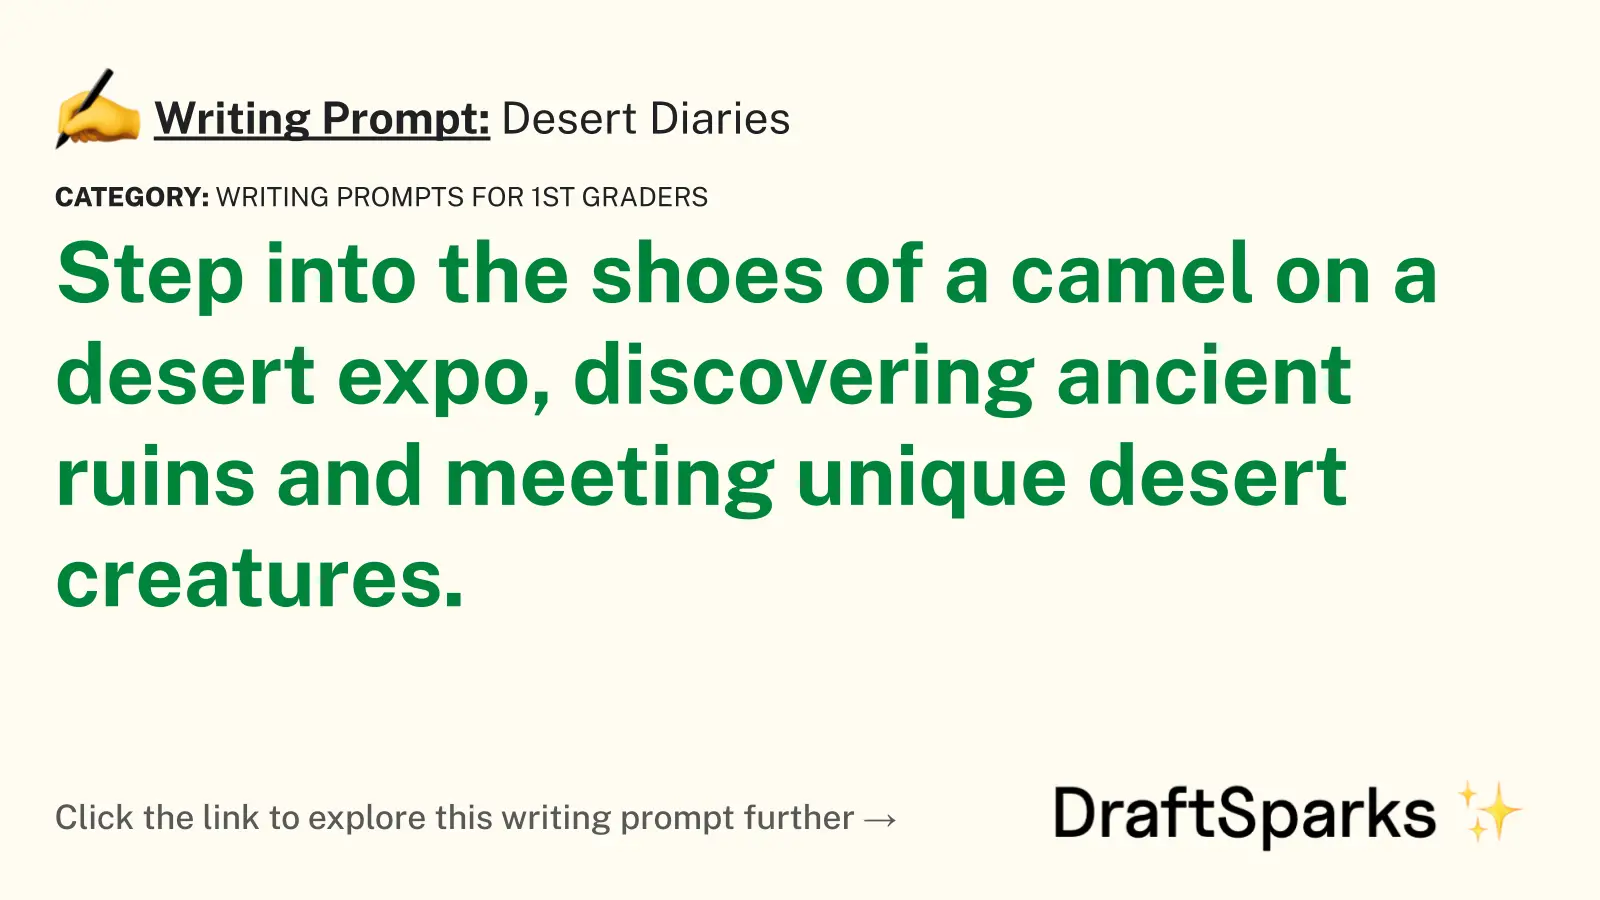 Desert Diaries